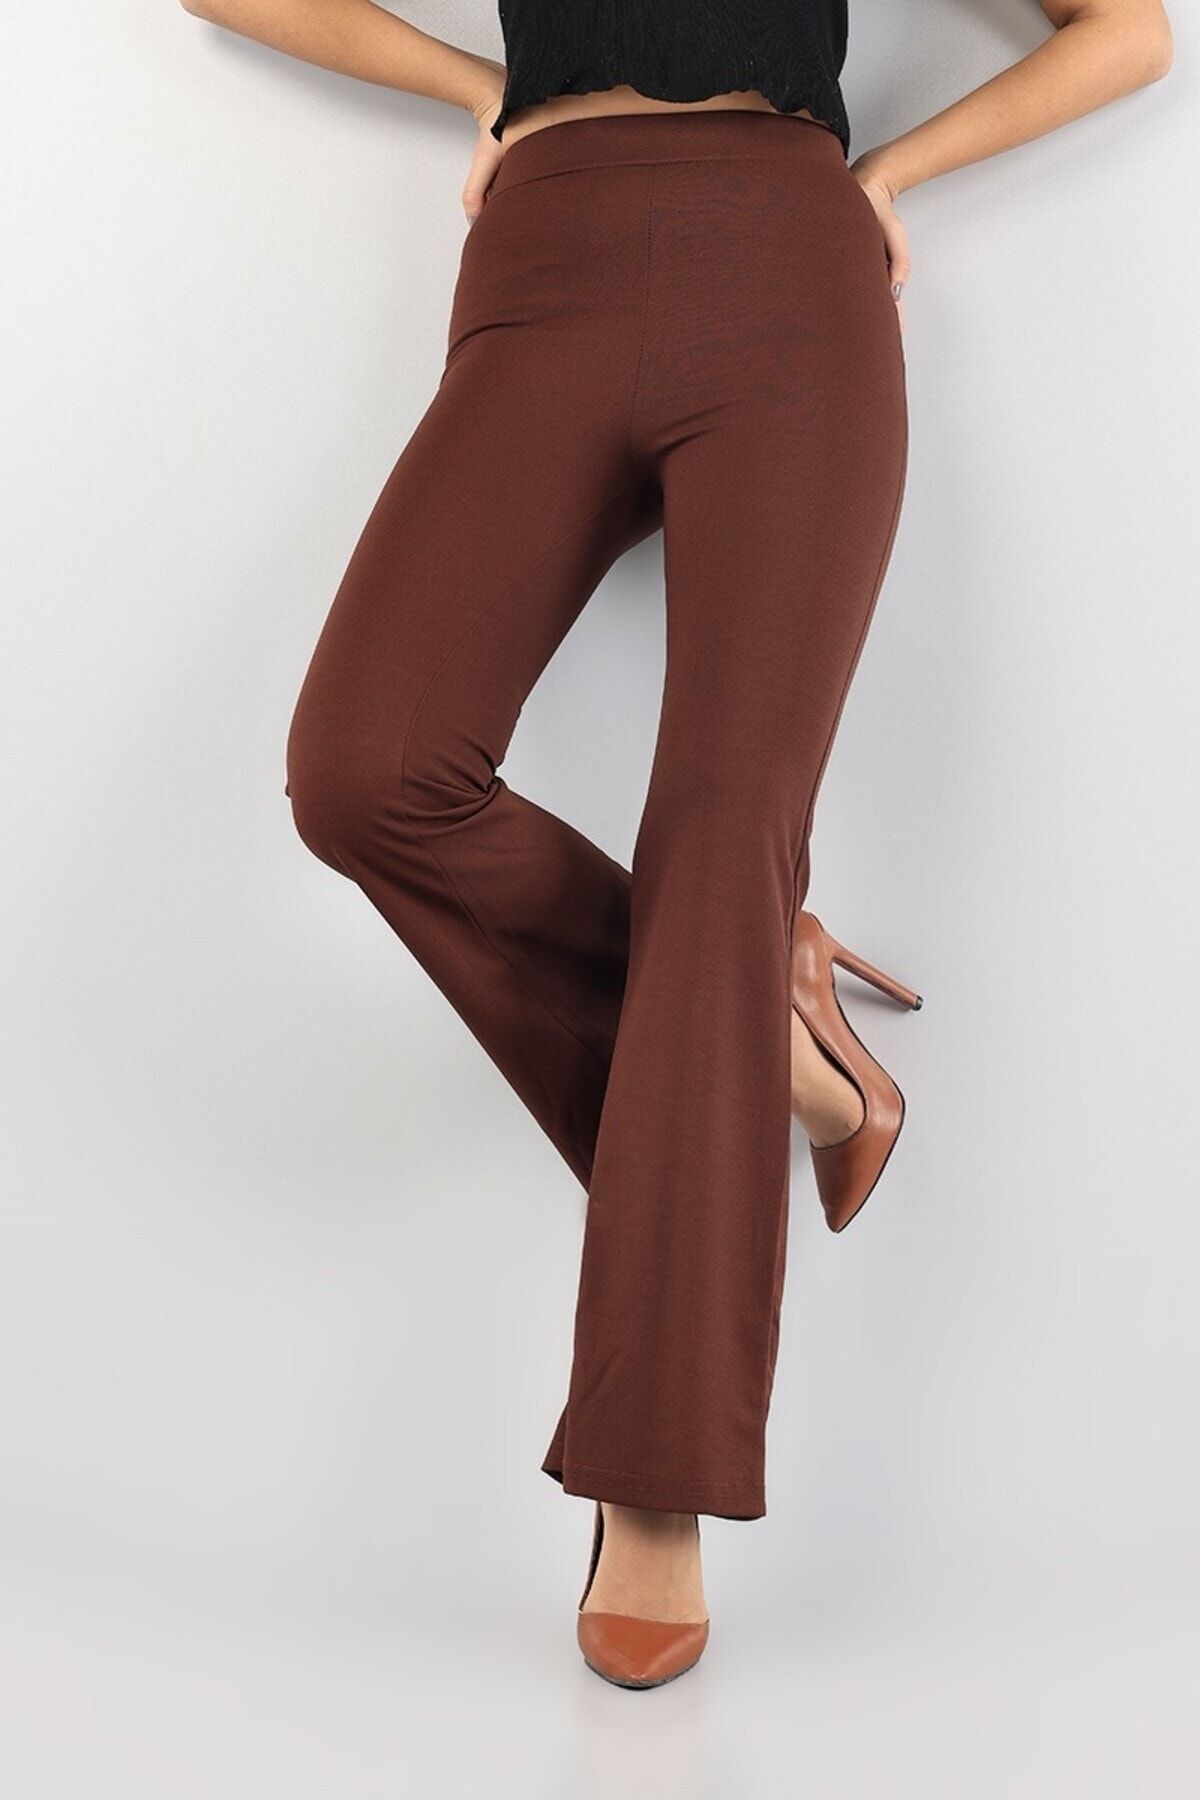 Butik Şımarık Women's Brown High Waist Flared Leg Crepe Fabric